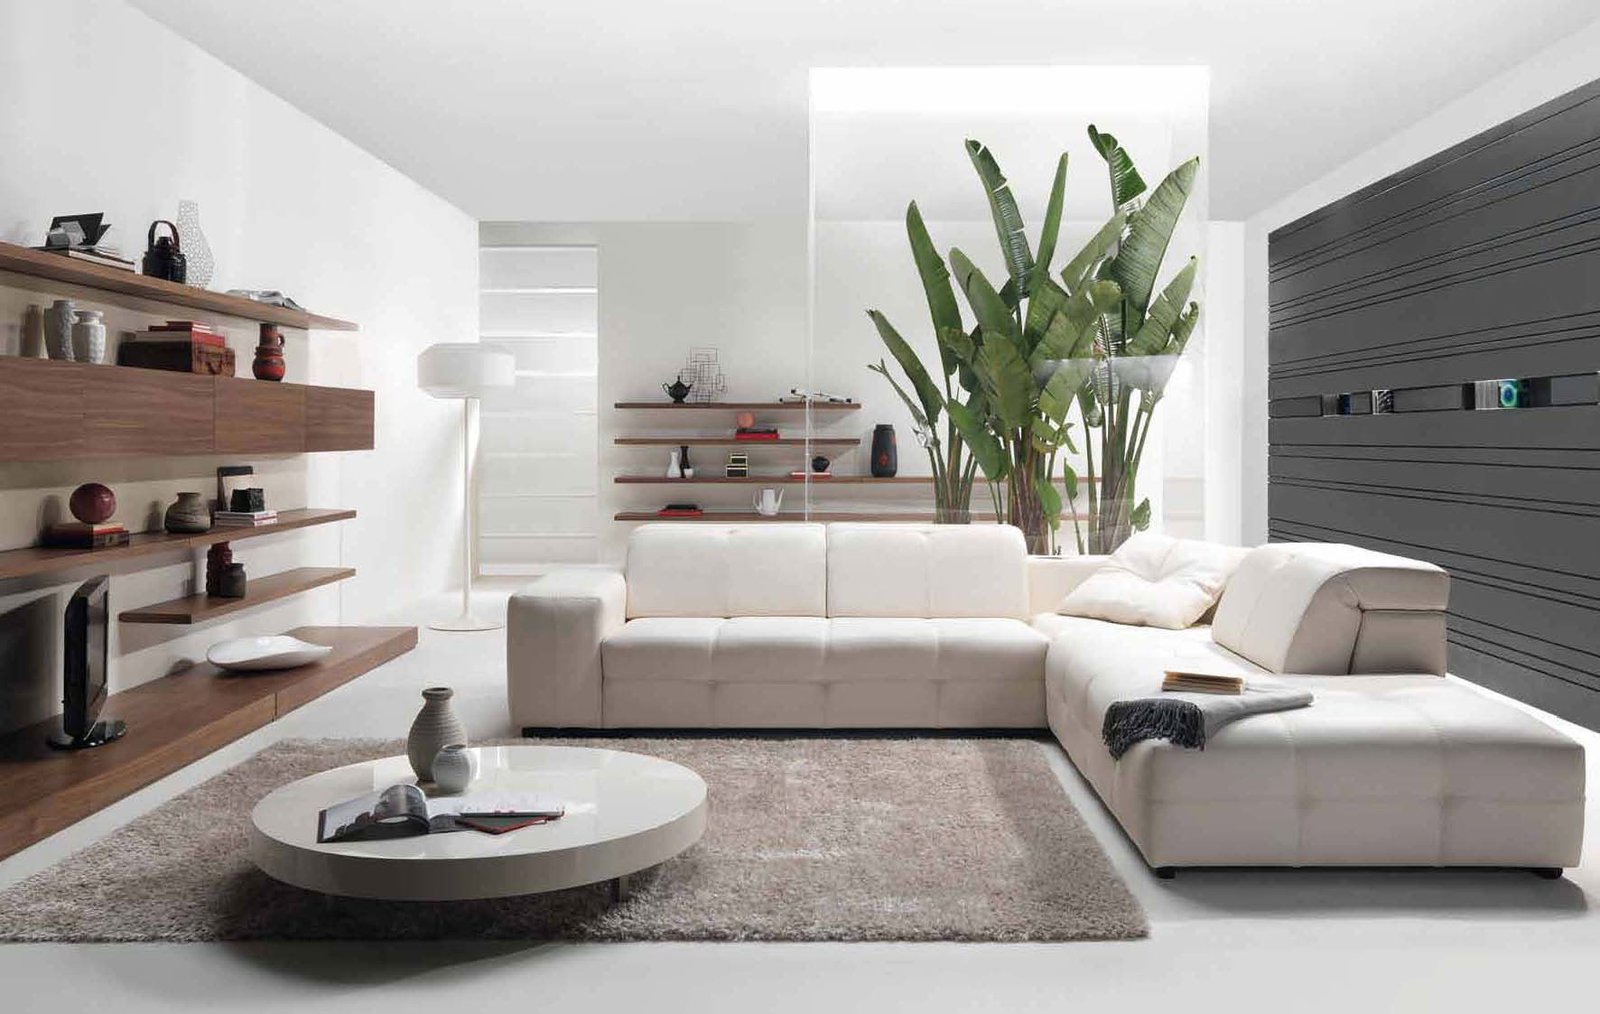 living room modern designs beautiful decor contemporary interior rooms family decorating livingroom moderno style interiors furniture idea apartment small space